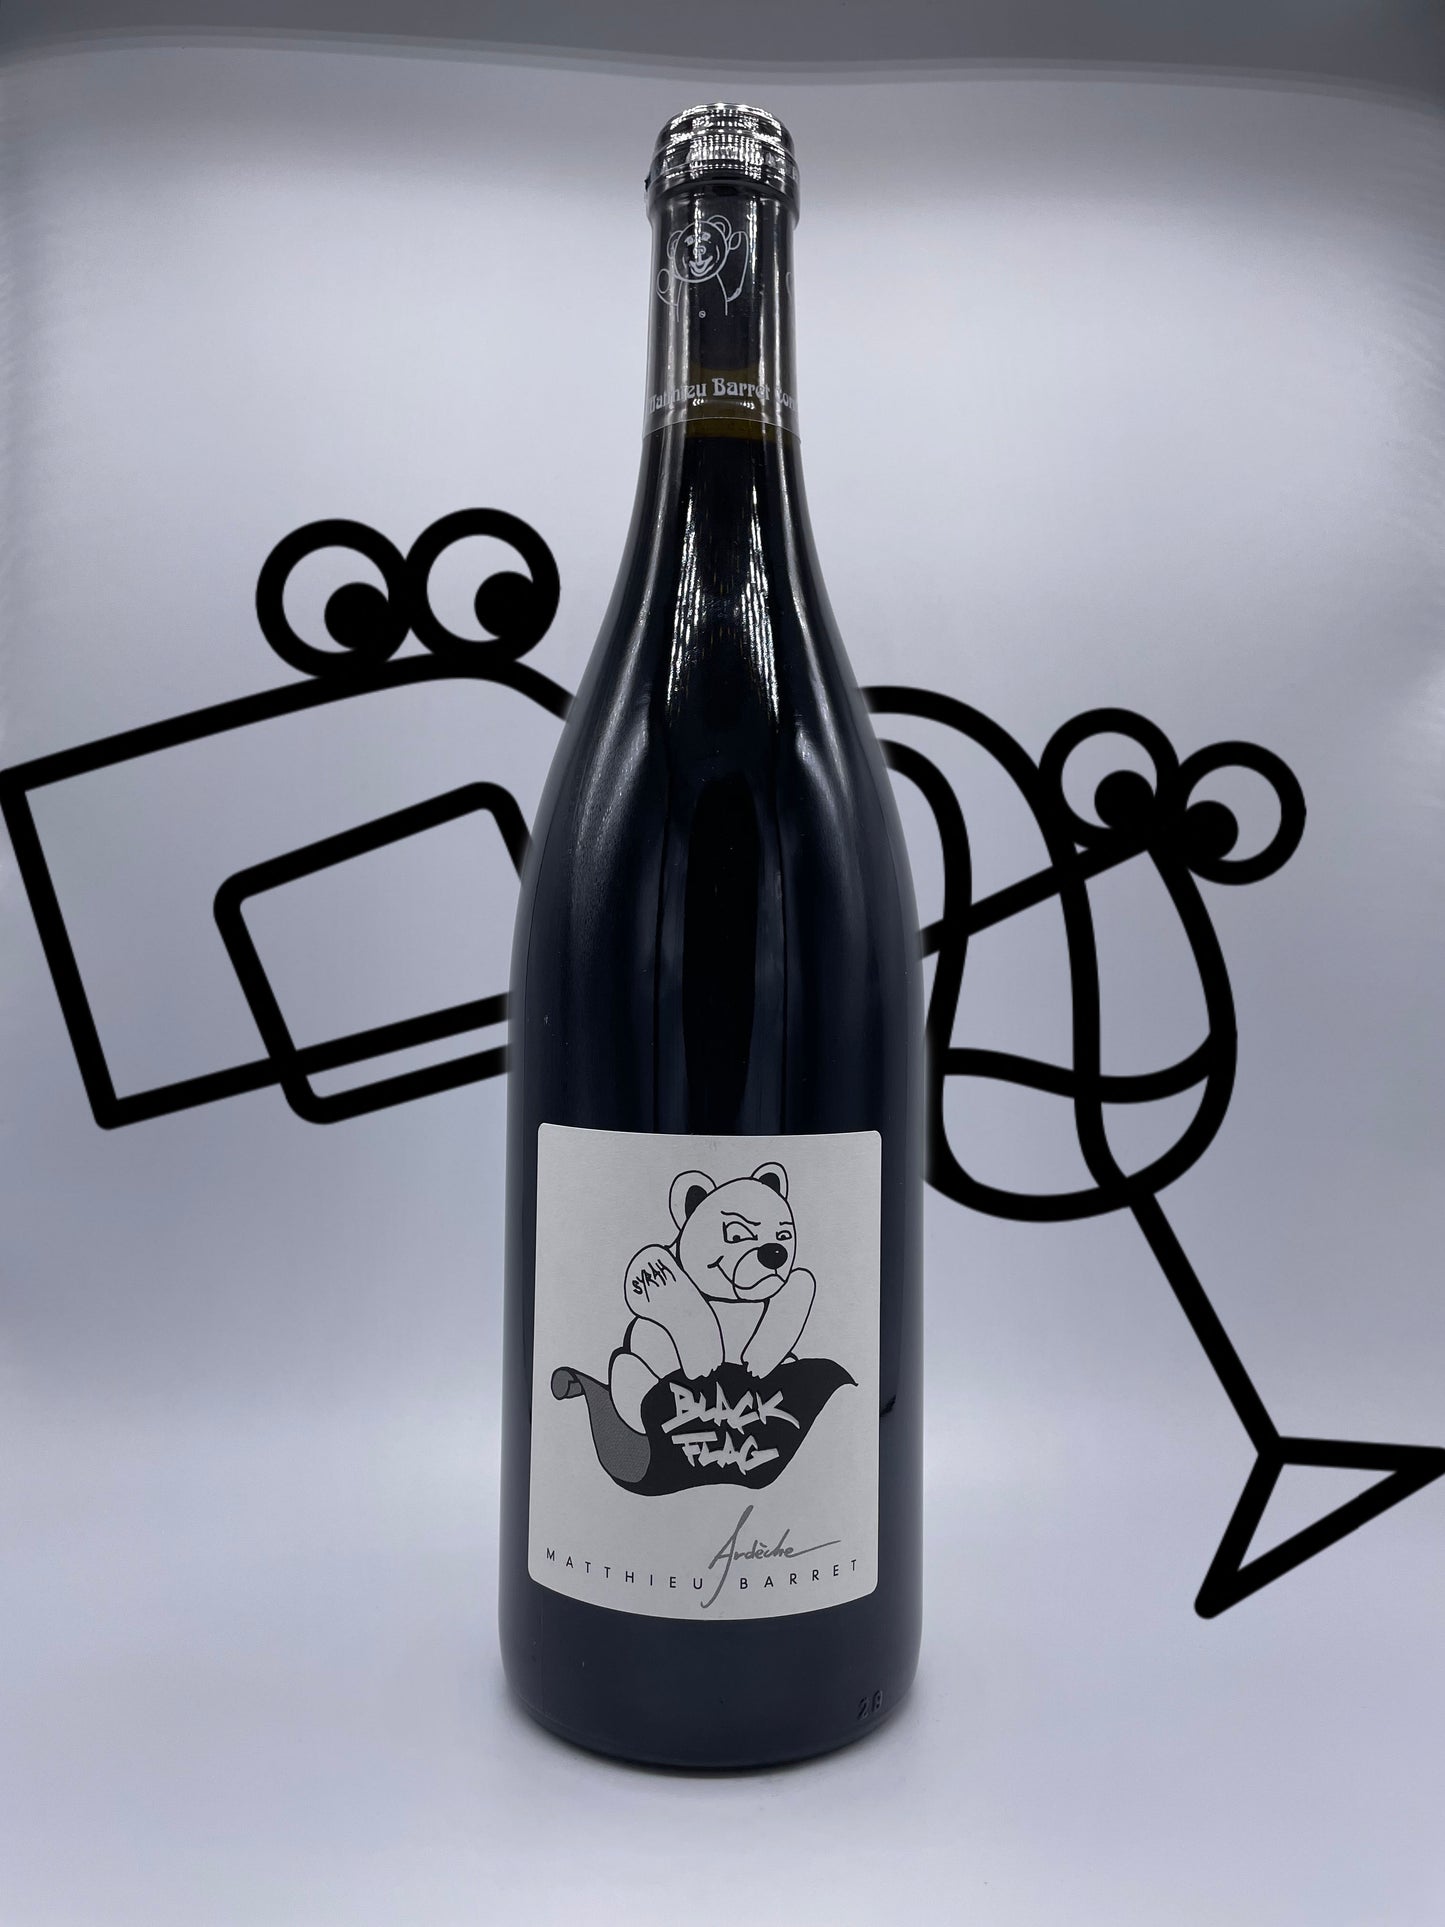 Matthieu Barret 'Black Flag' IGP Ardèche Williston Park Wines